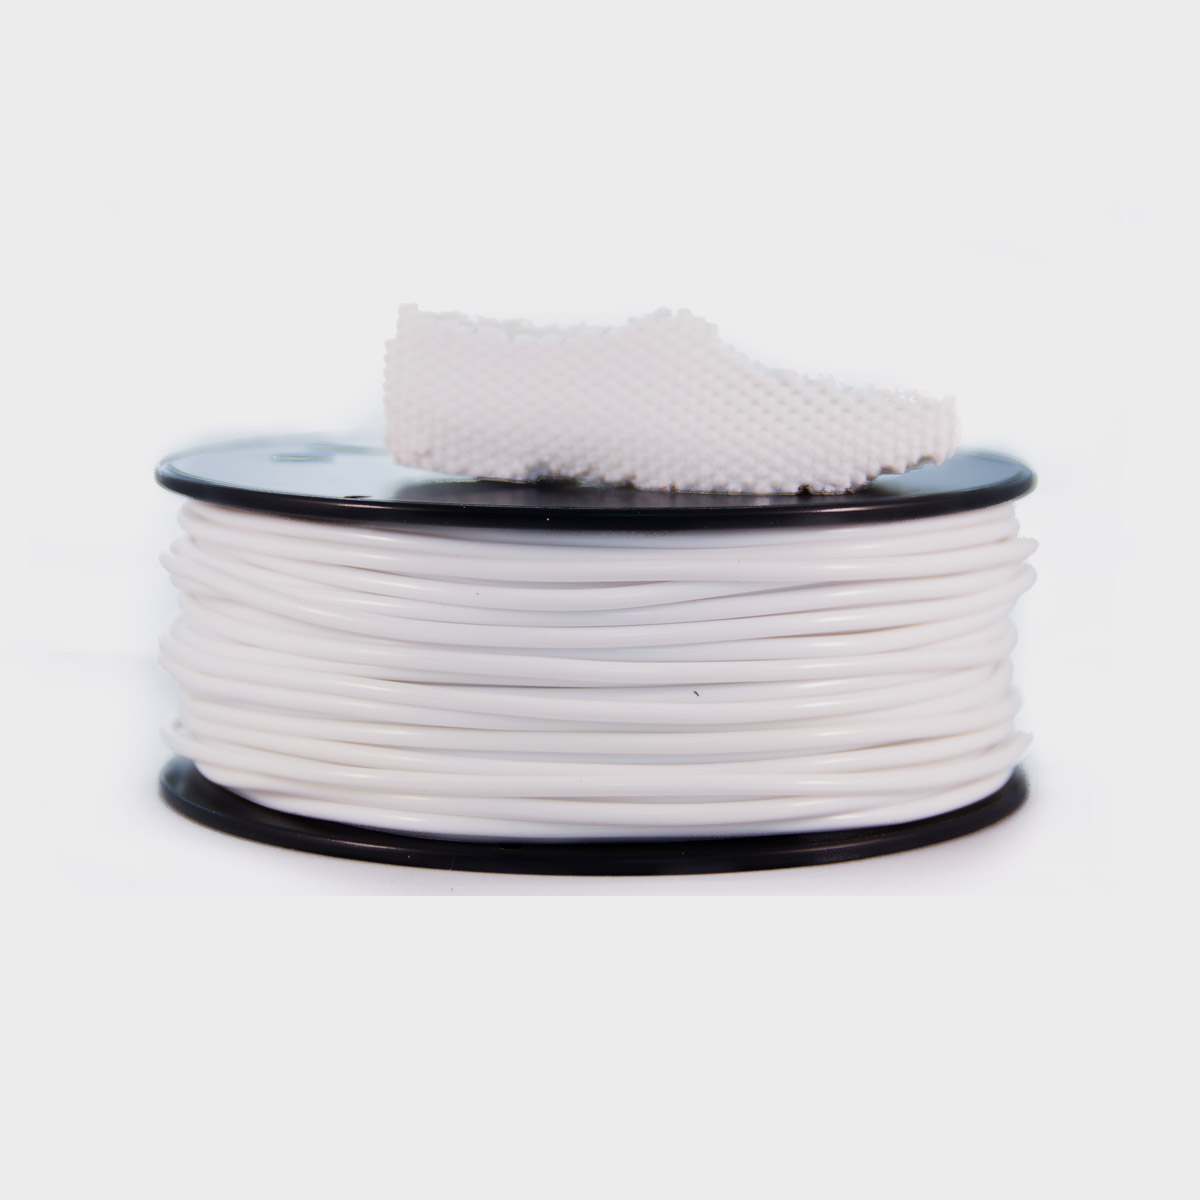 500g Rolle FilaFlex 3D Drucker Filament 3mm in Weiss - White